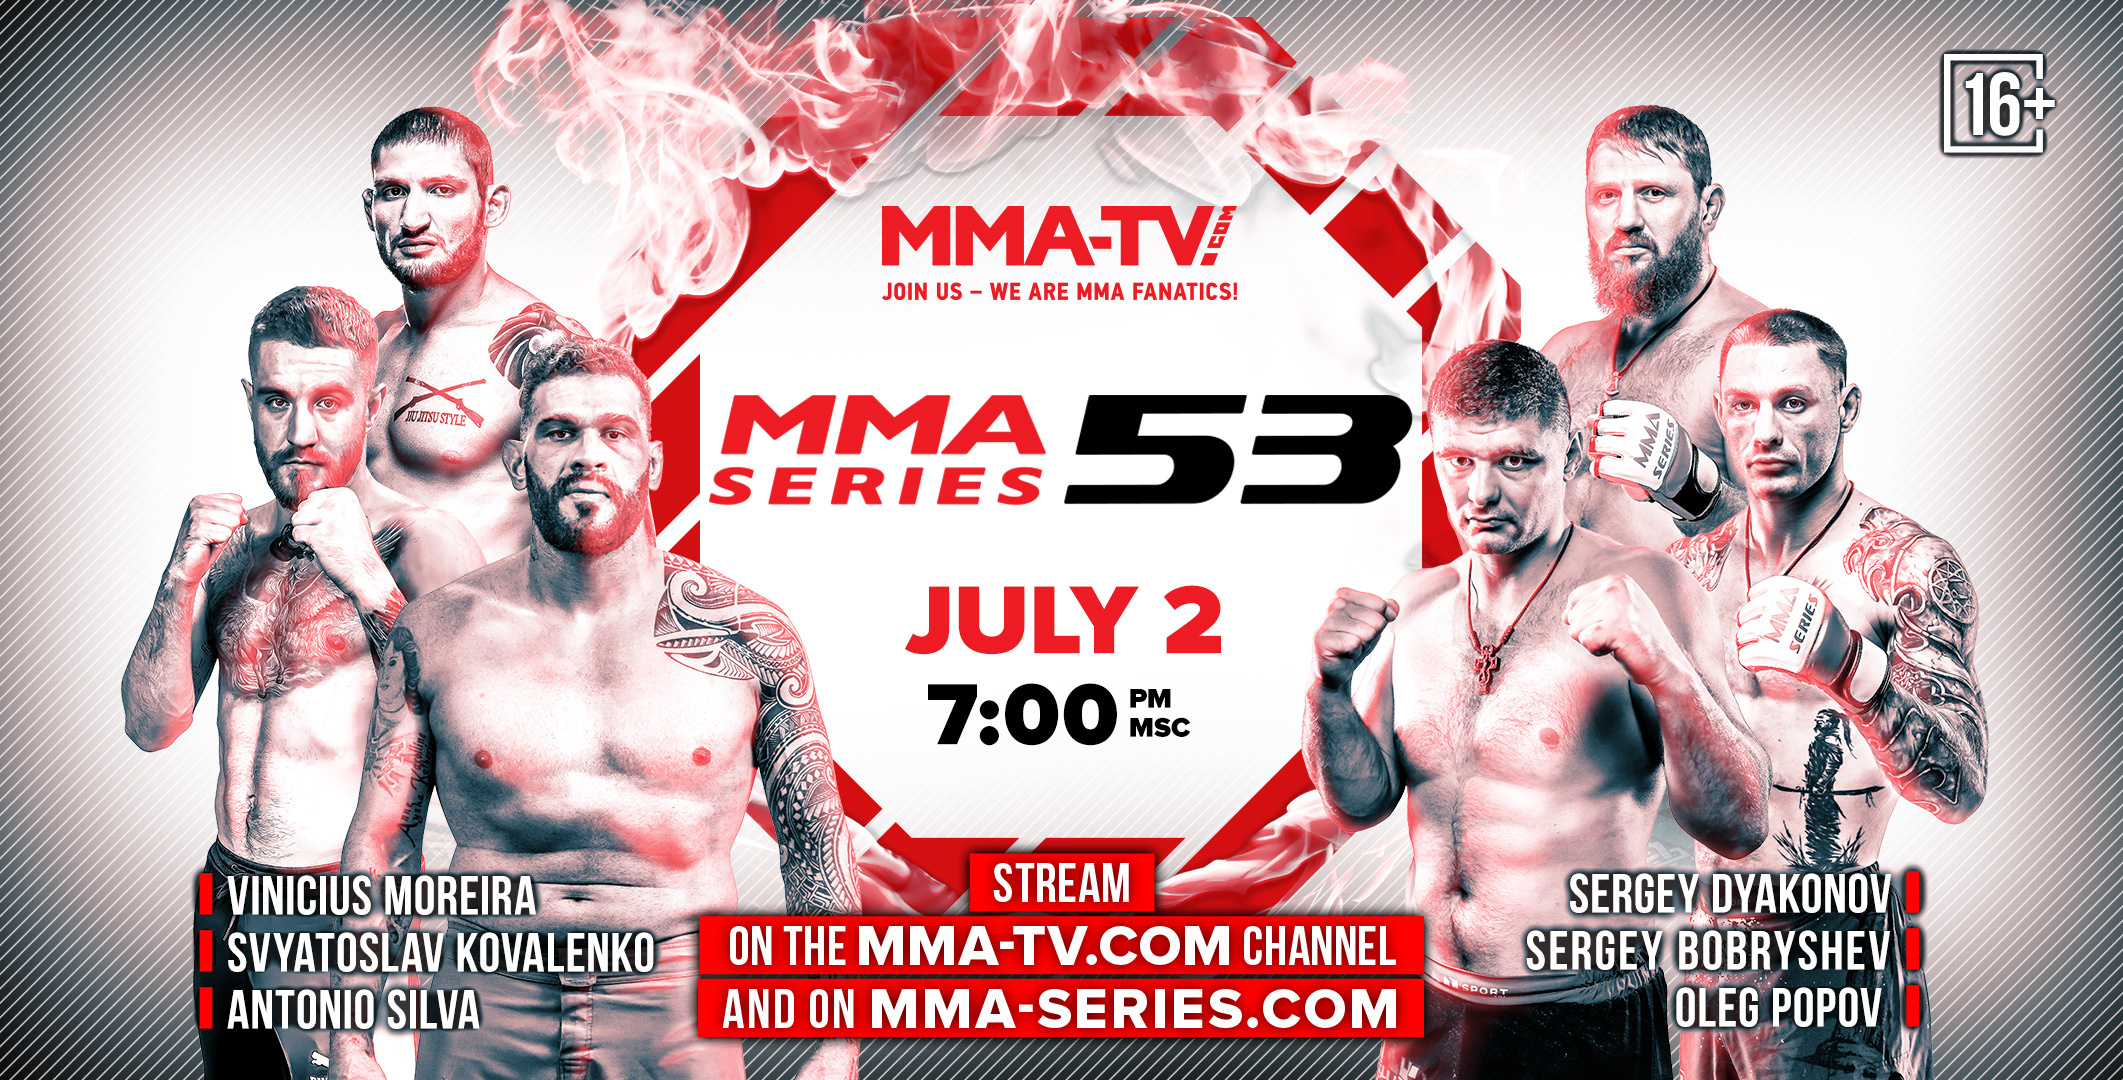 MMA Series-53 full stream MMA Series official website